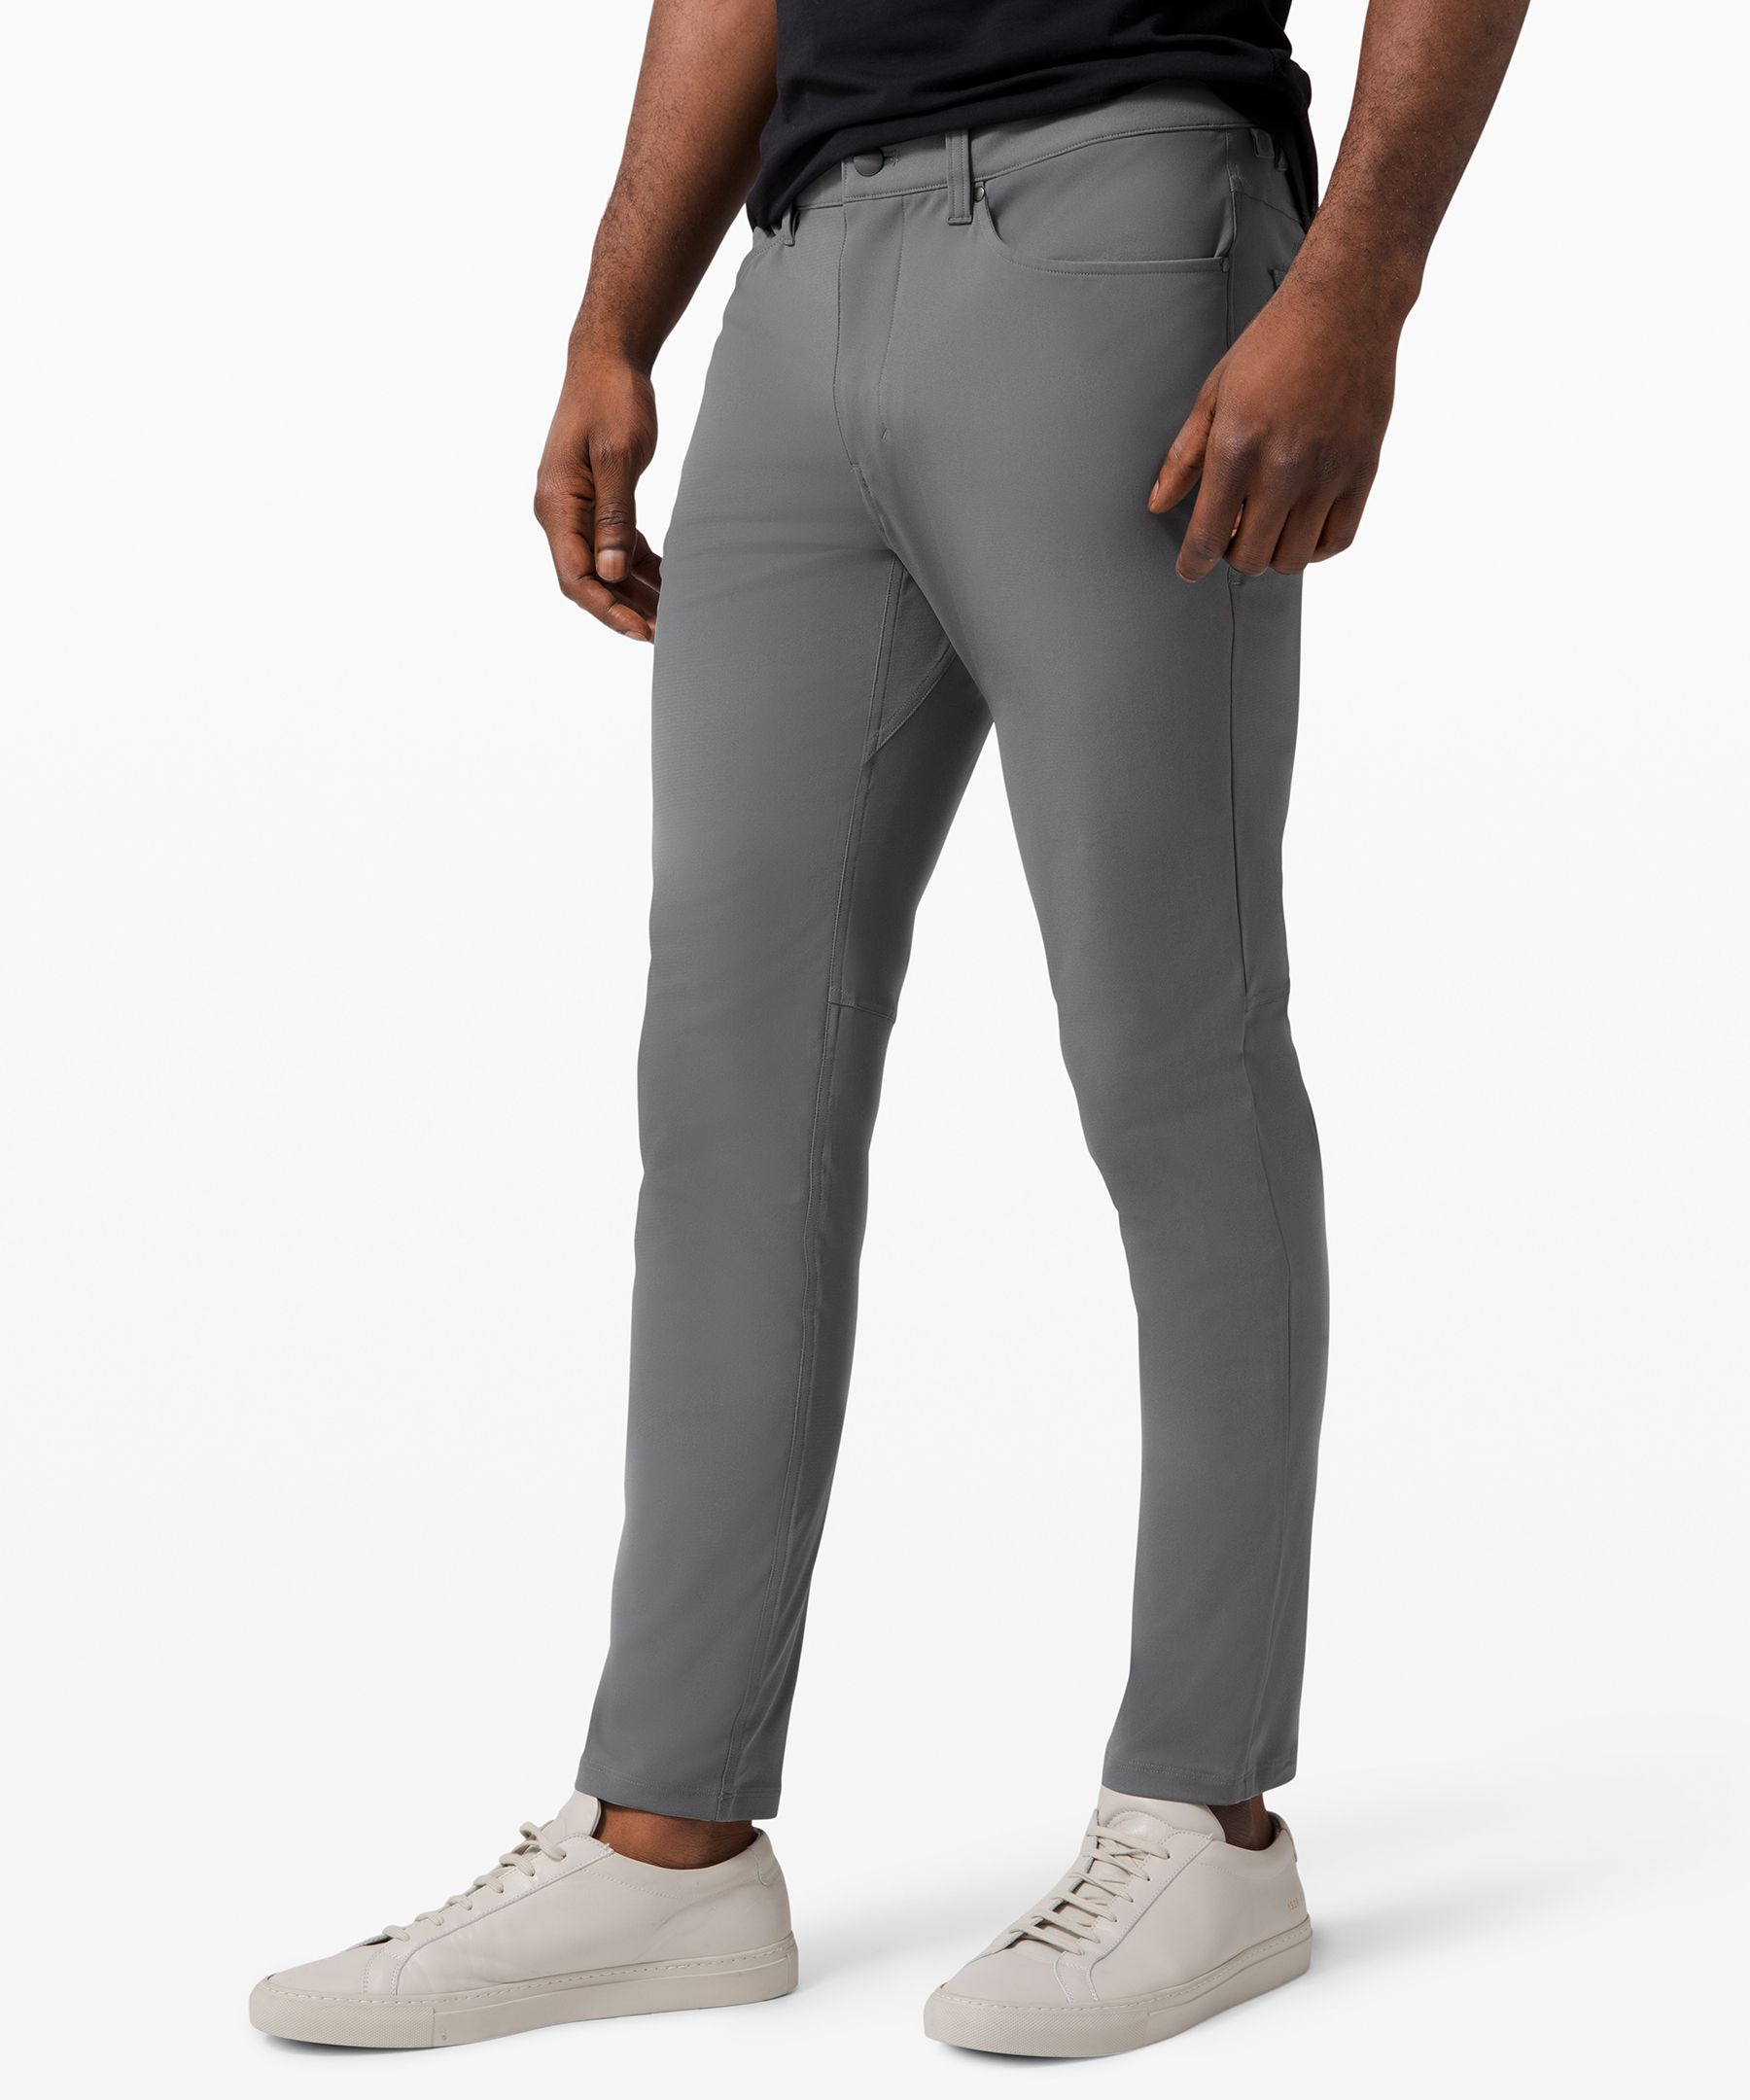 lululemon gray pants